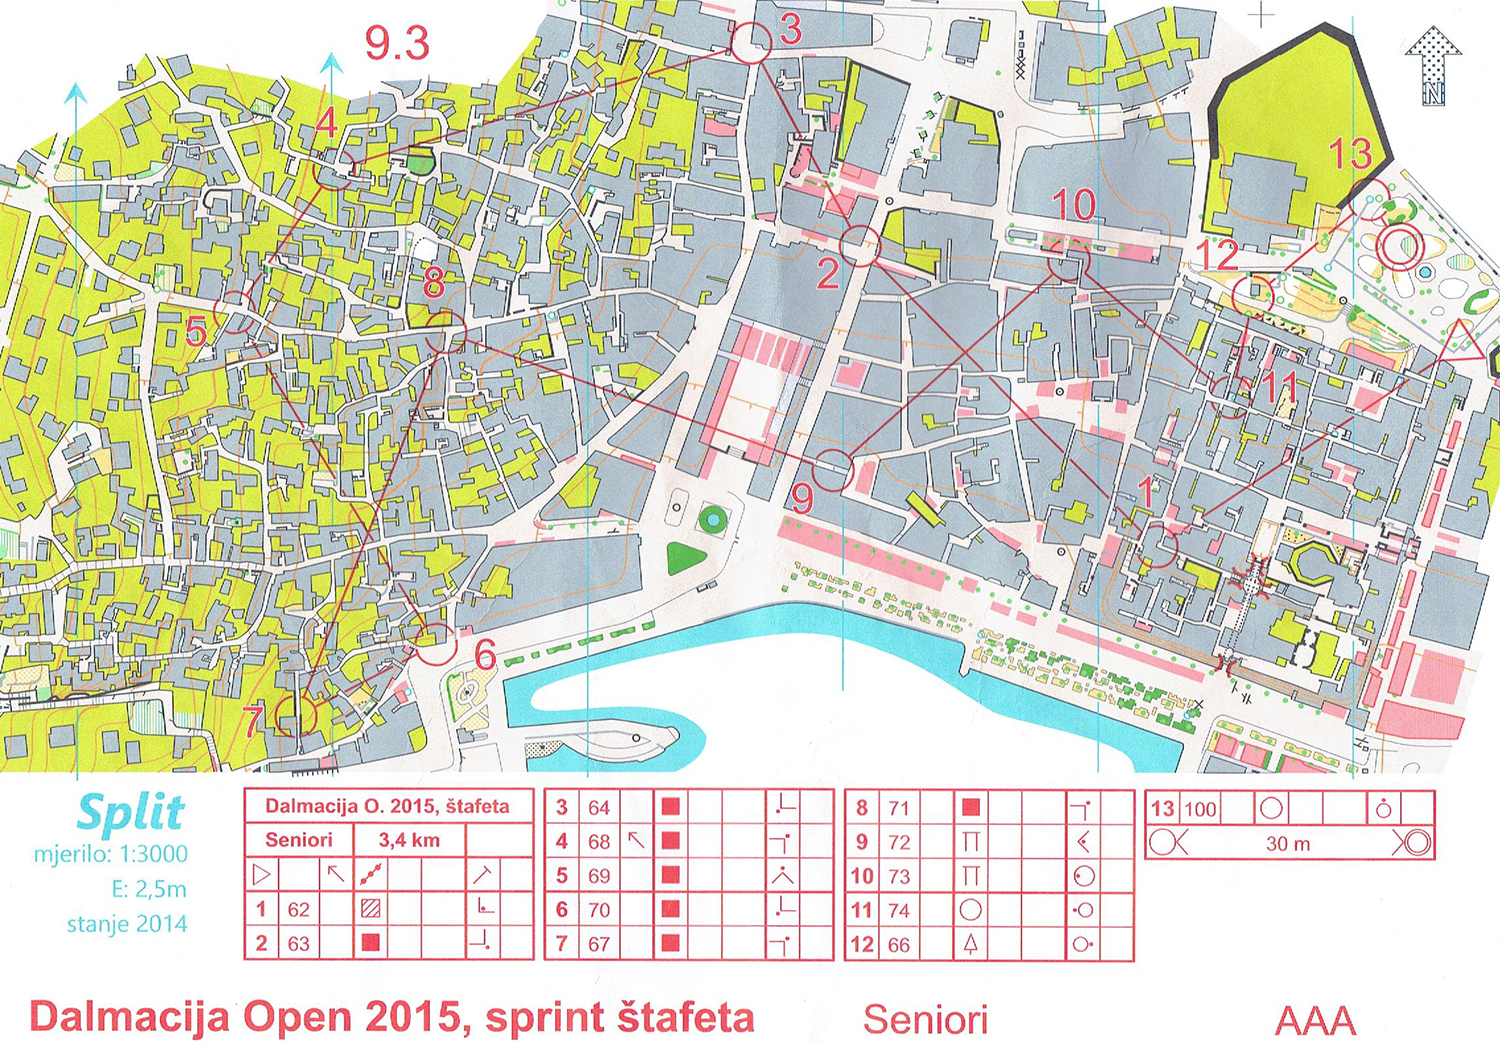 Dalmacija open - mixed sprint relay (10/10/2015)